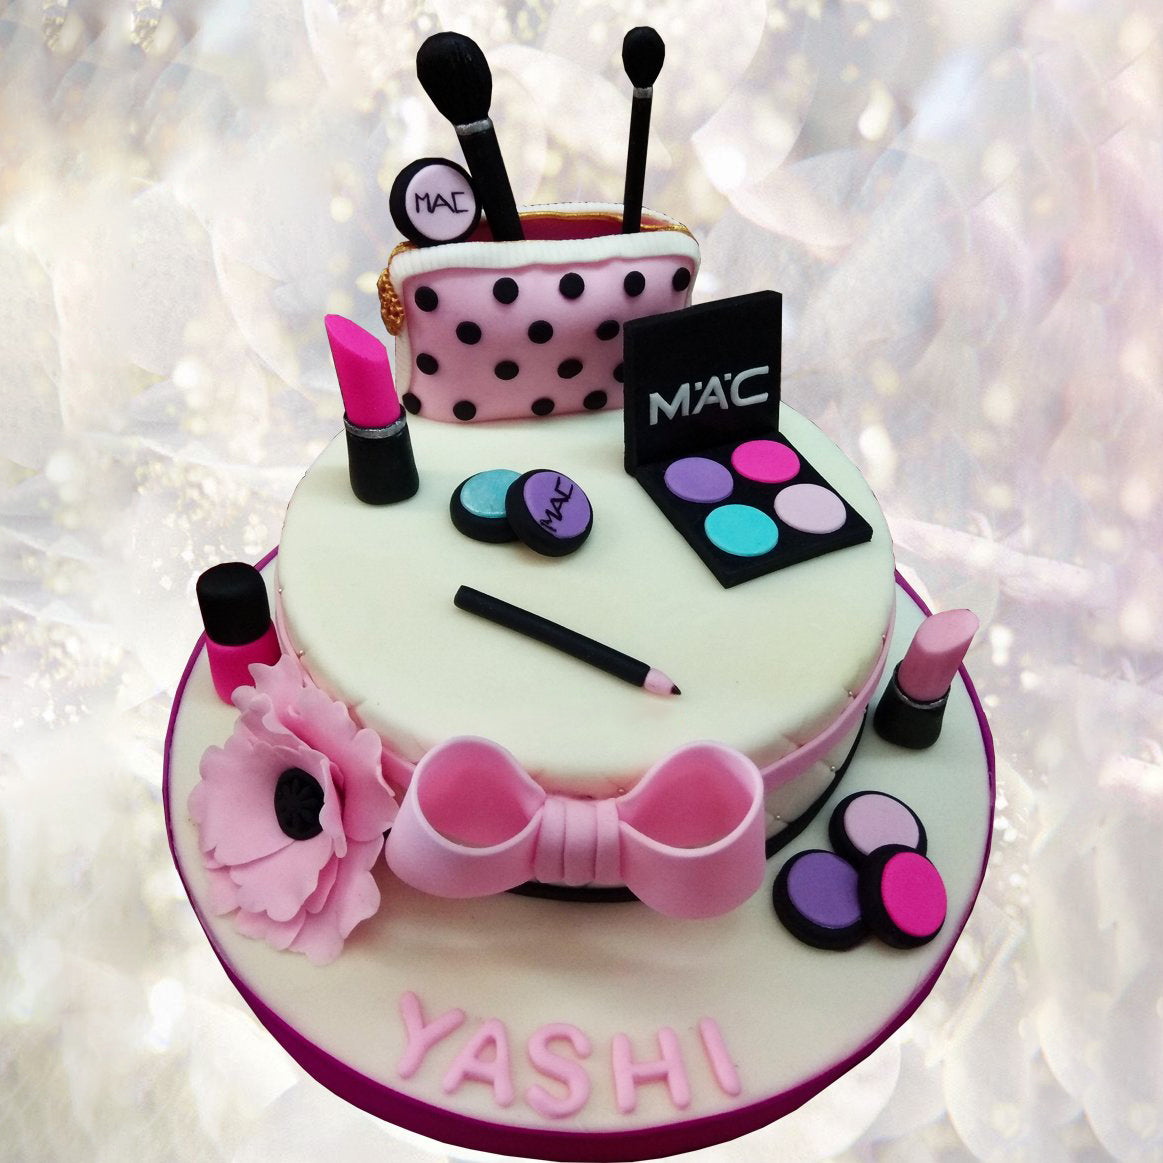 Makeup Birthday Cake - Buy/Send Makeup Cakes to Makeup Lover Online